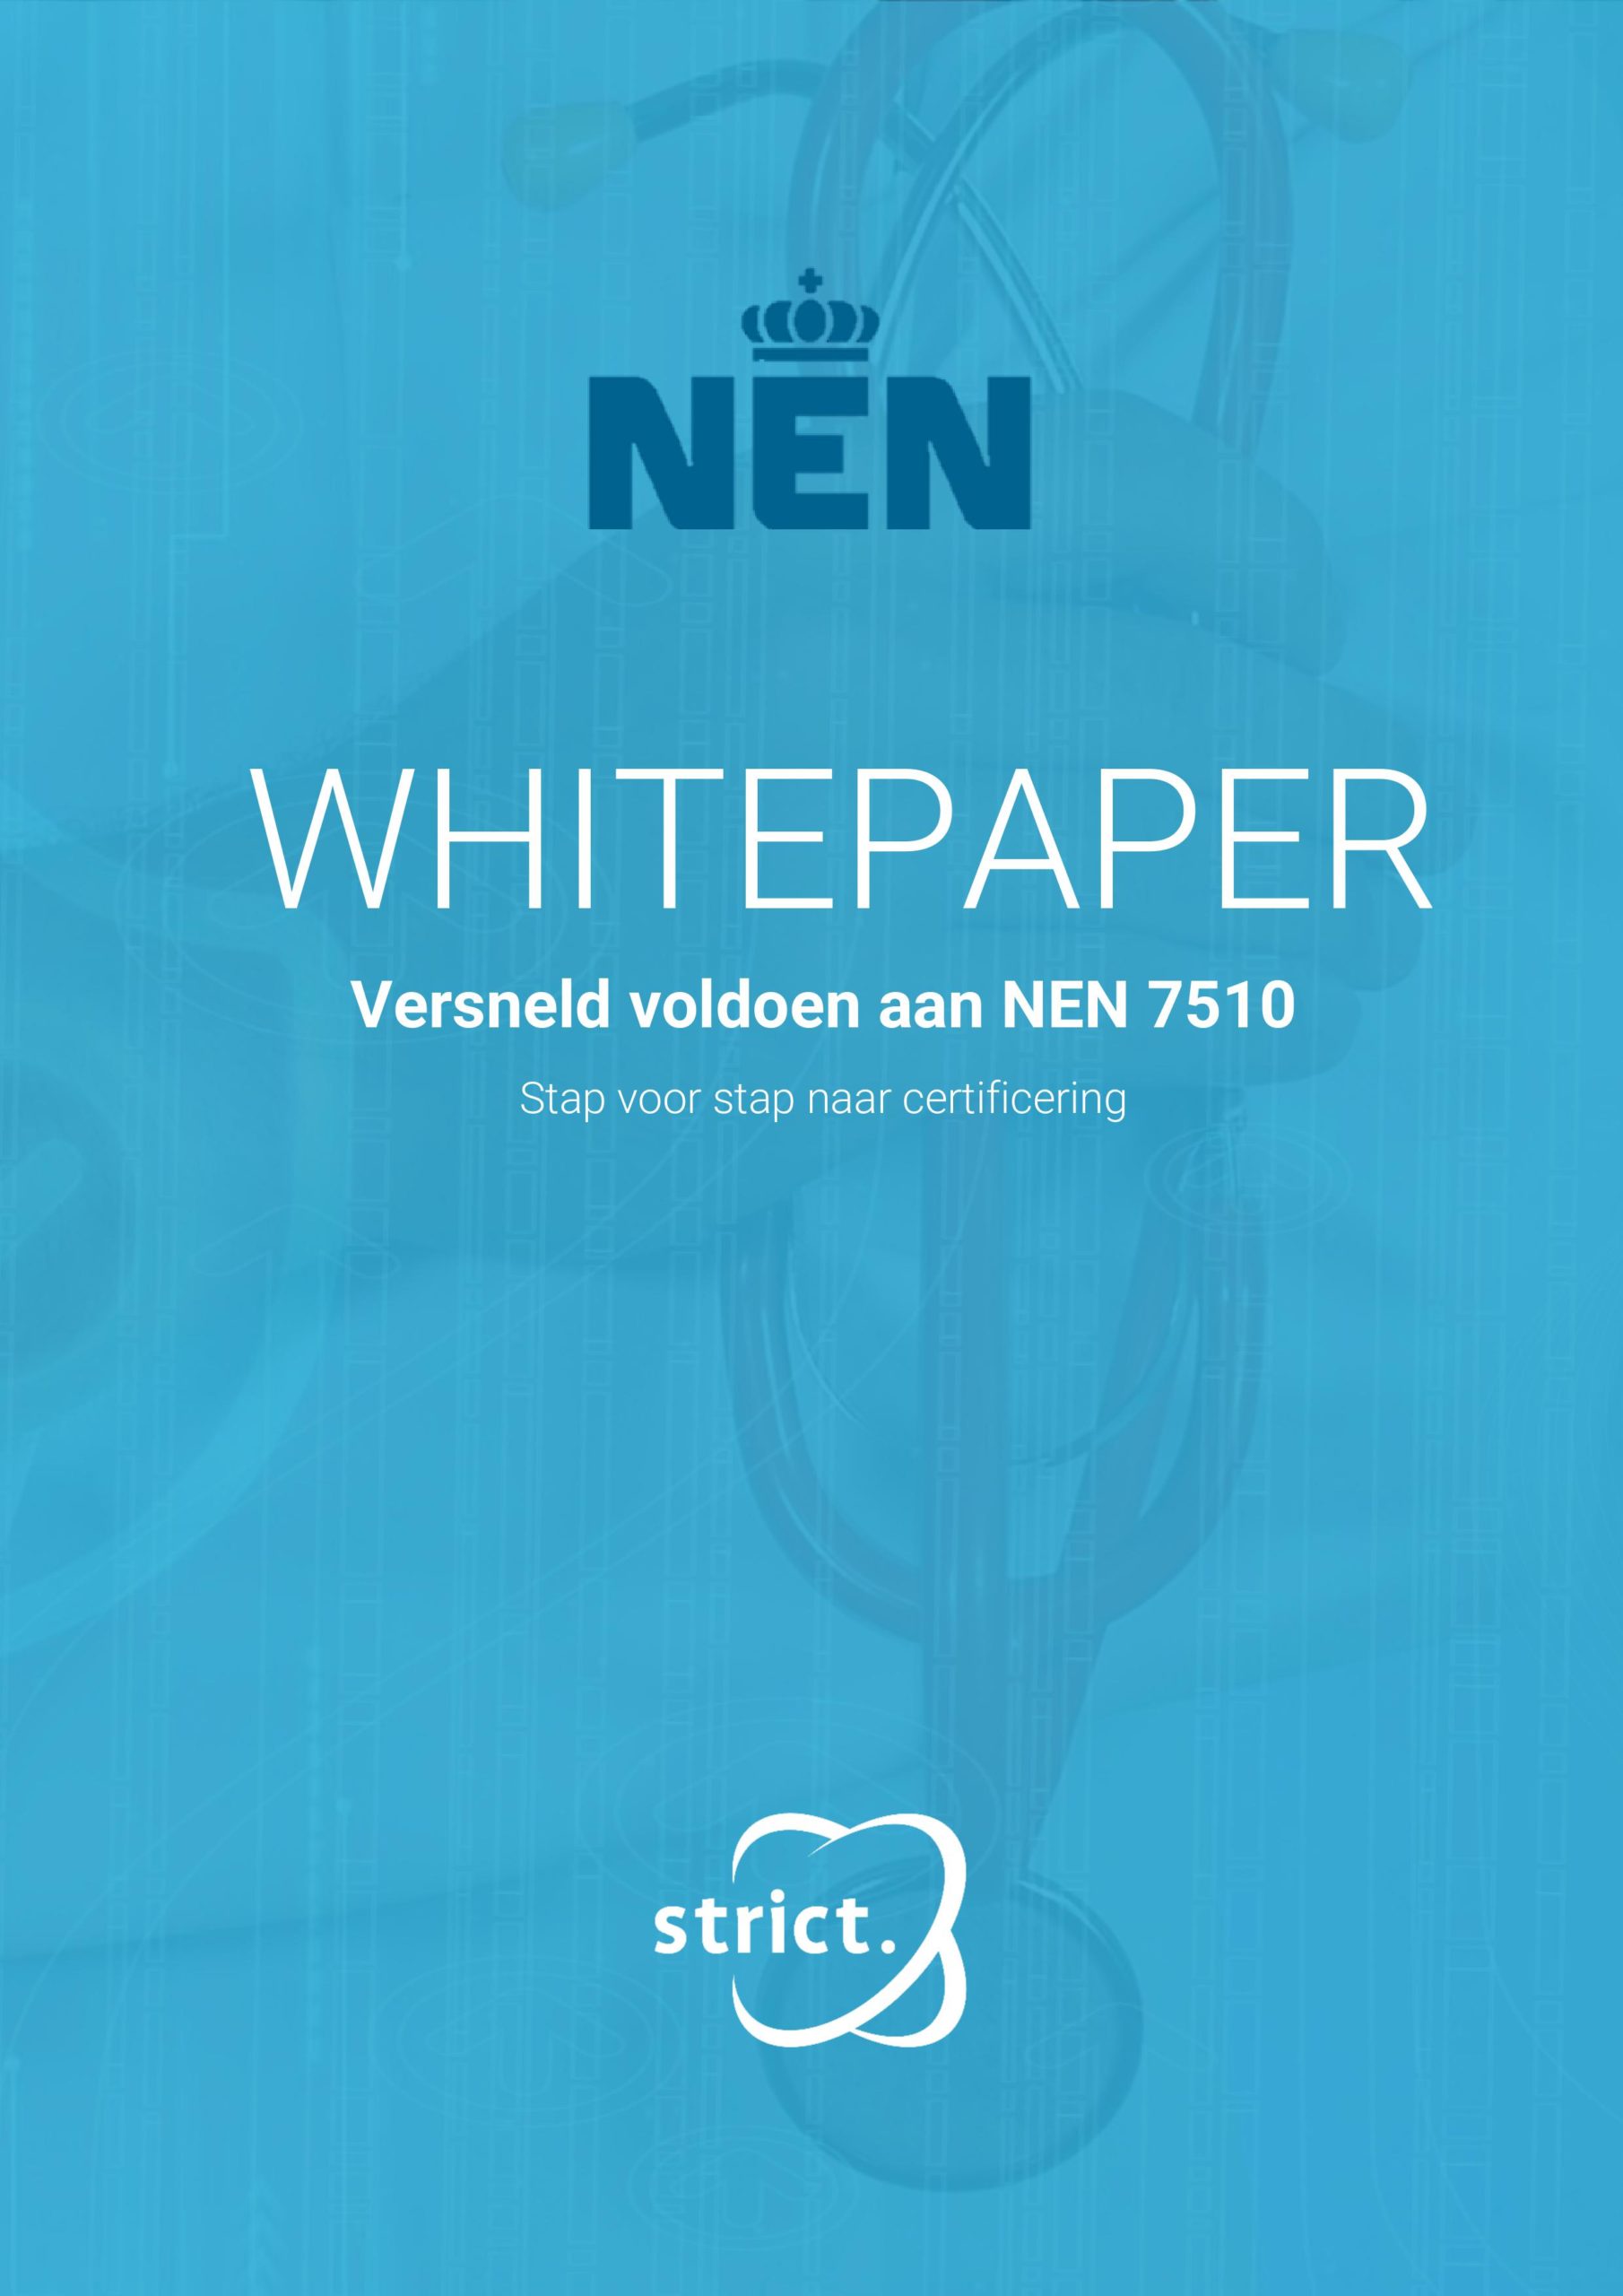 Whitepaper-NEN-scaled